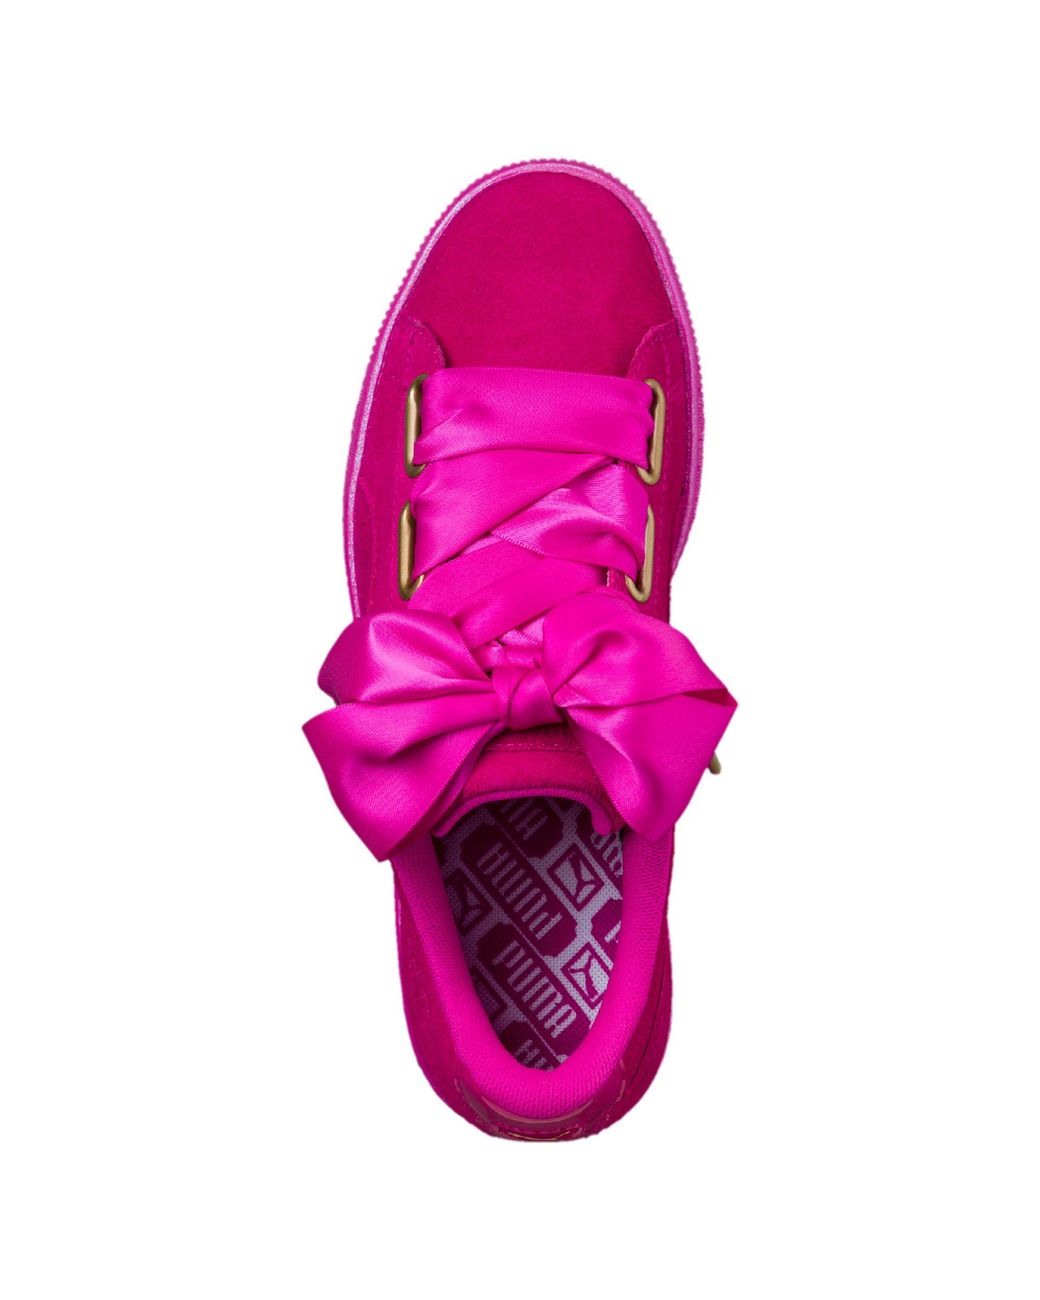 PUMA Suede Low-Top Sneakers in Ultra Magenta-Ultra Magenta (Pink) | Lyst